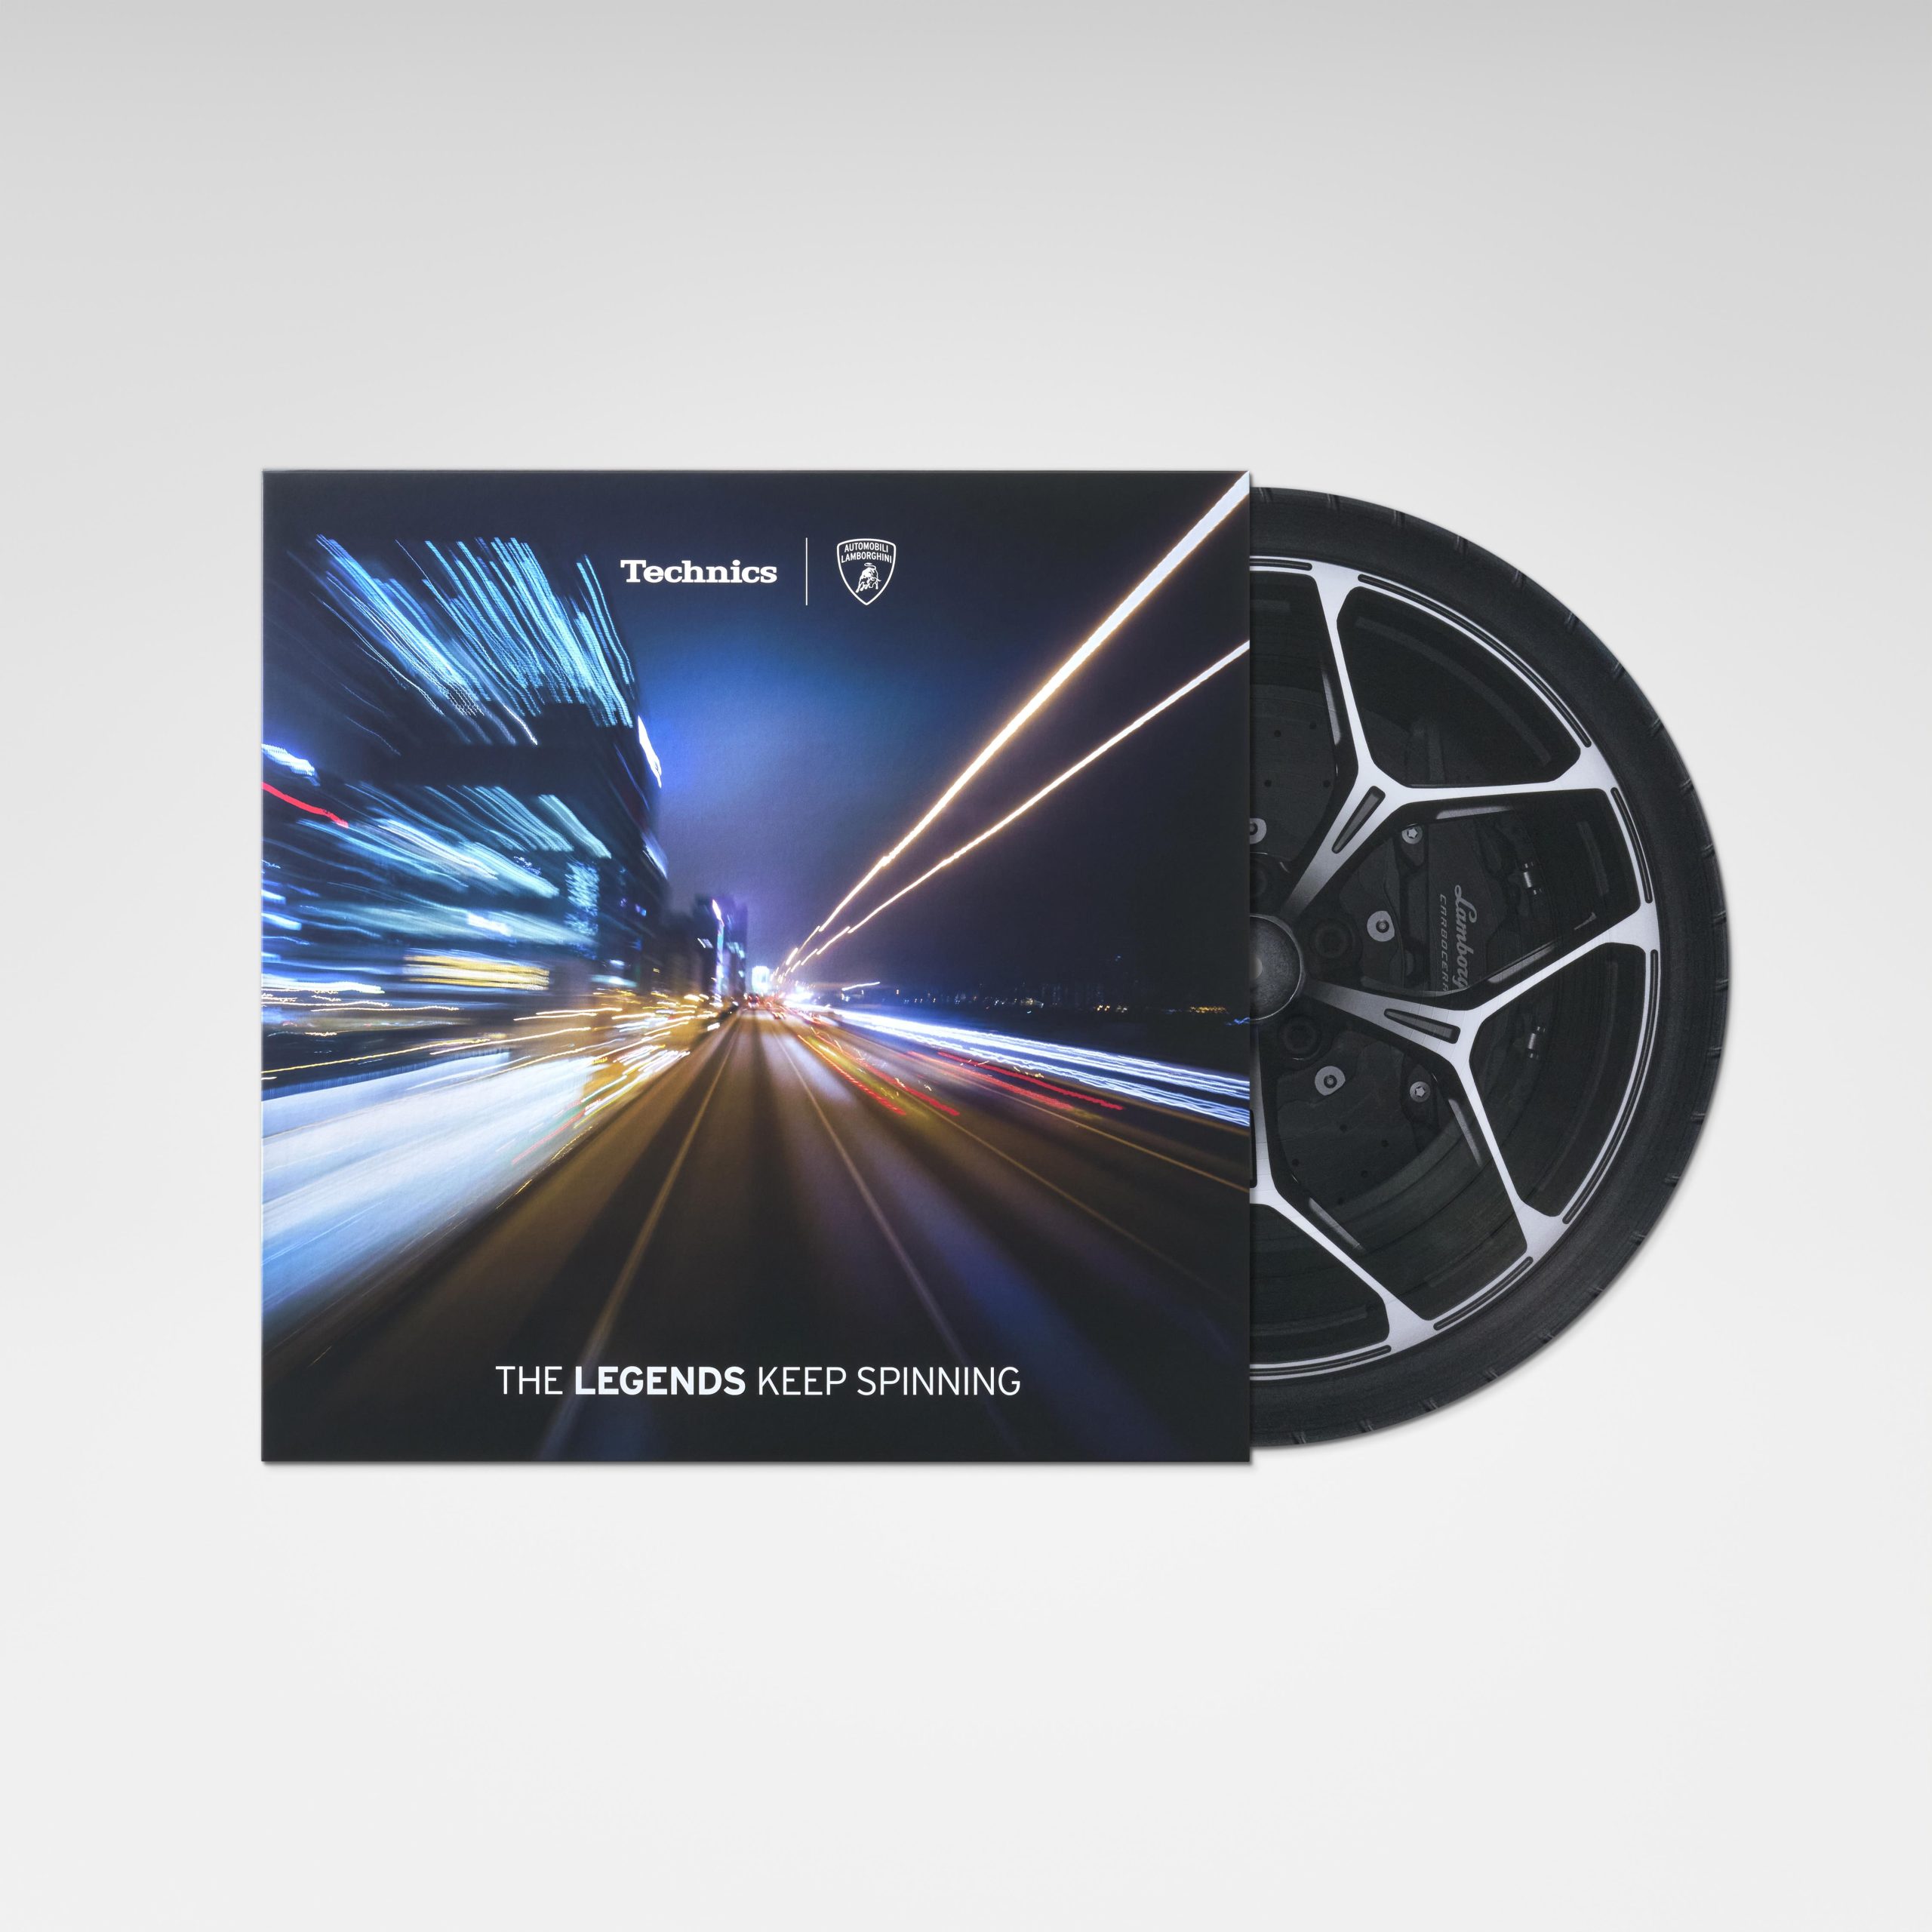 Lamborghini's Greatest Hits Album is Now Available on Vinyl